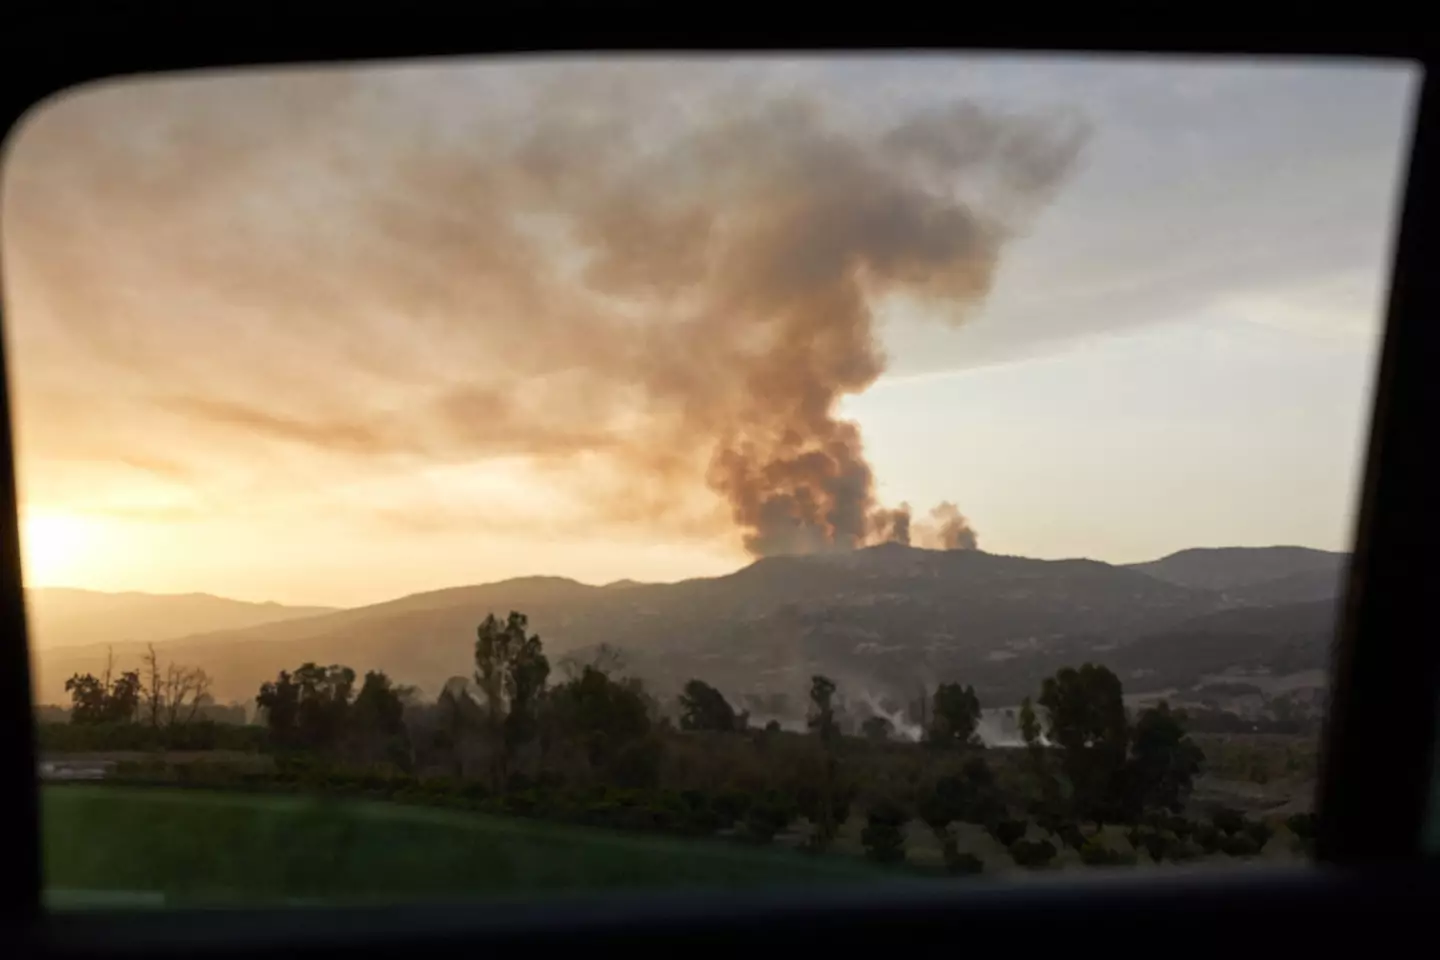 Algeria was struck by a series of devastating wildfires.